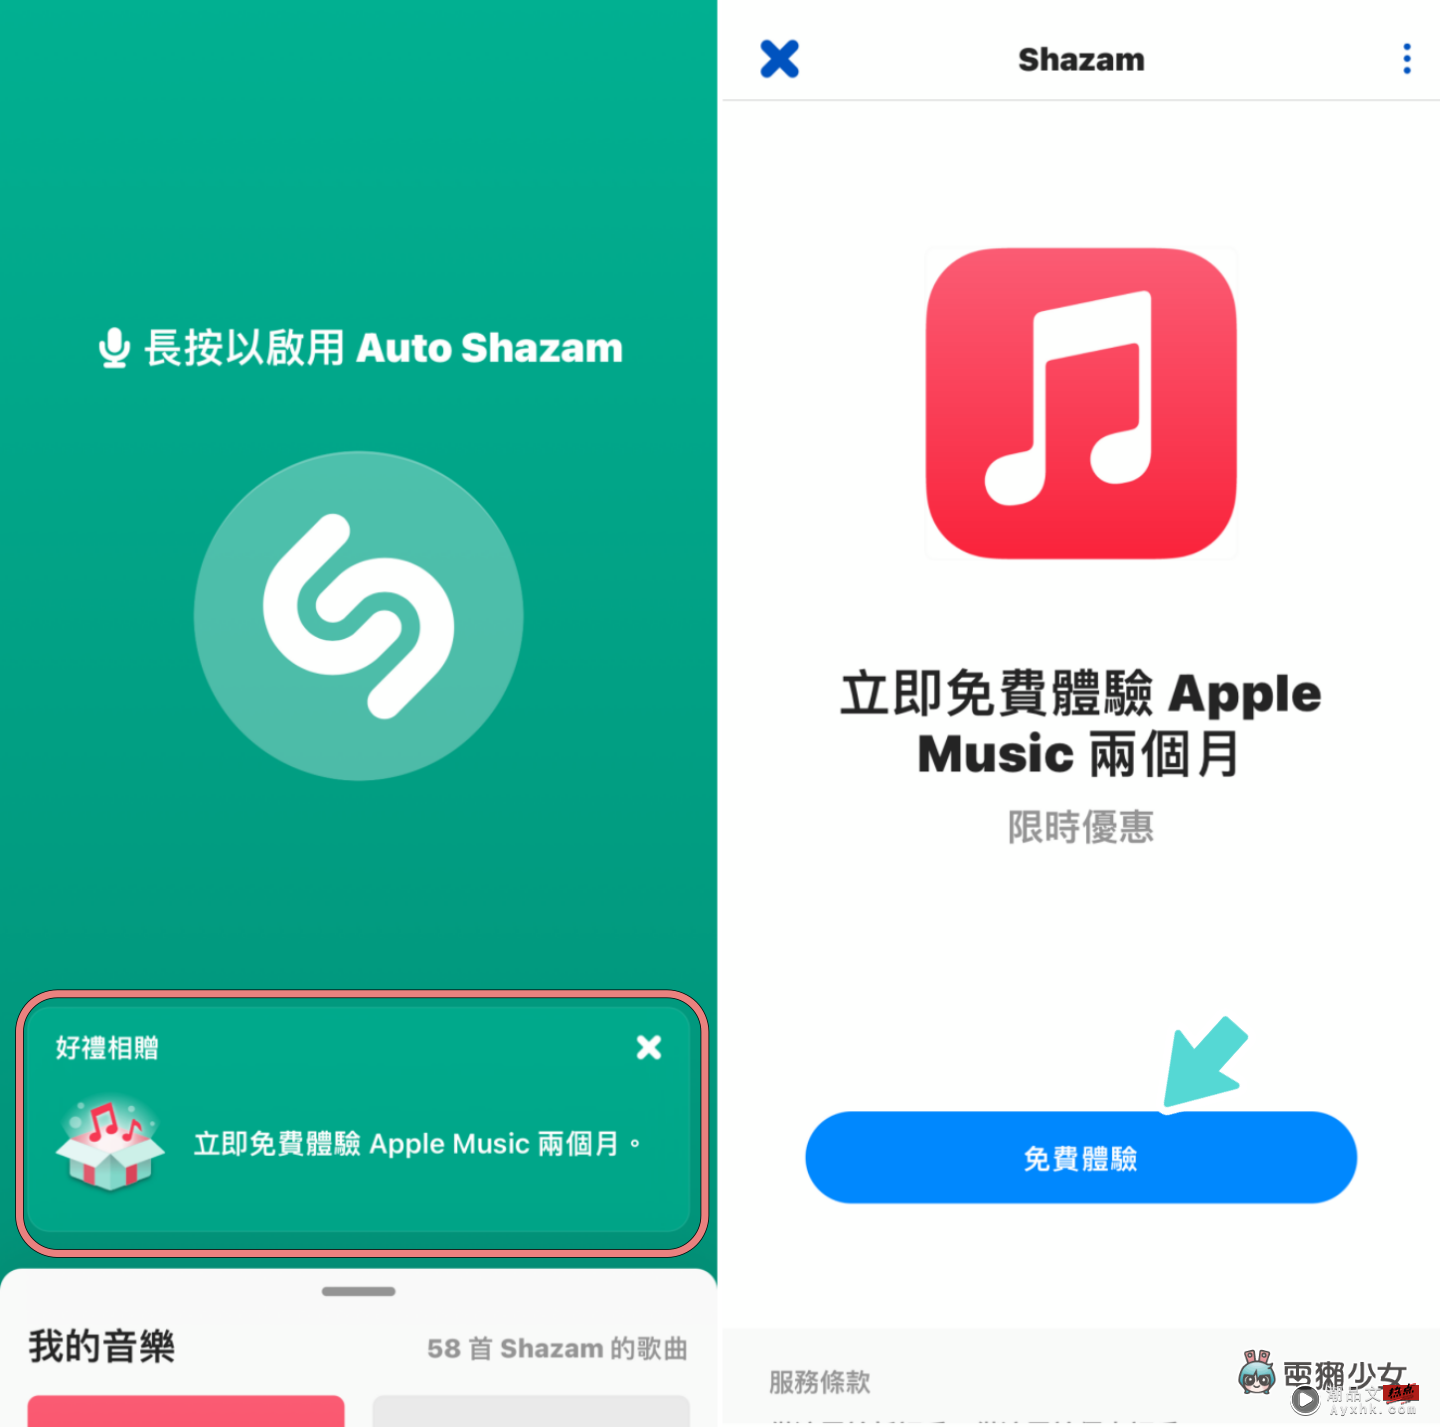 Apple Music 免费试用！用 Shazam 就能直接兑换！新用户可享免费体验 5 个月 数码科技 图2张